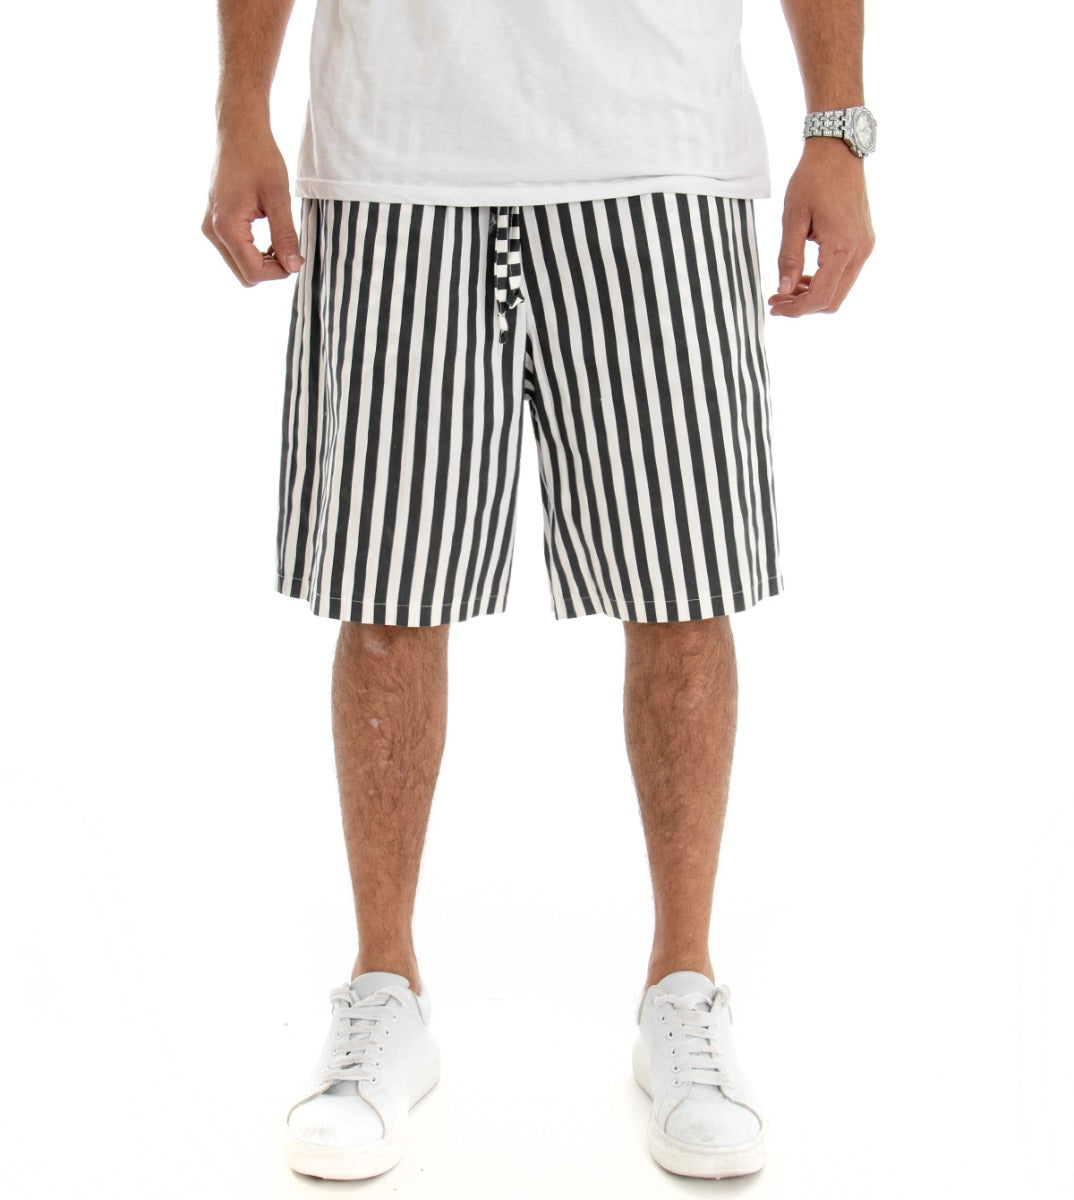 Short Men's Bermuda Shorts Striped Two-Tone Stripes GIOSAL-PC1447A